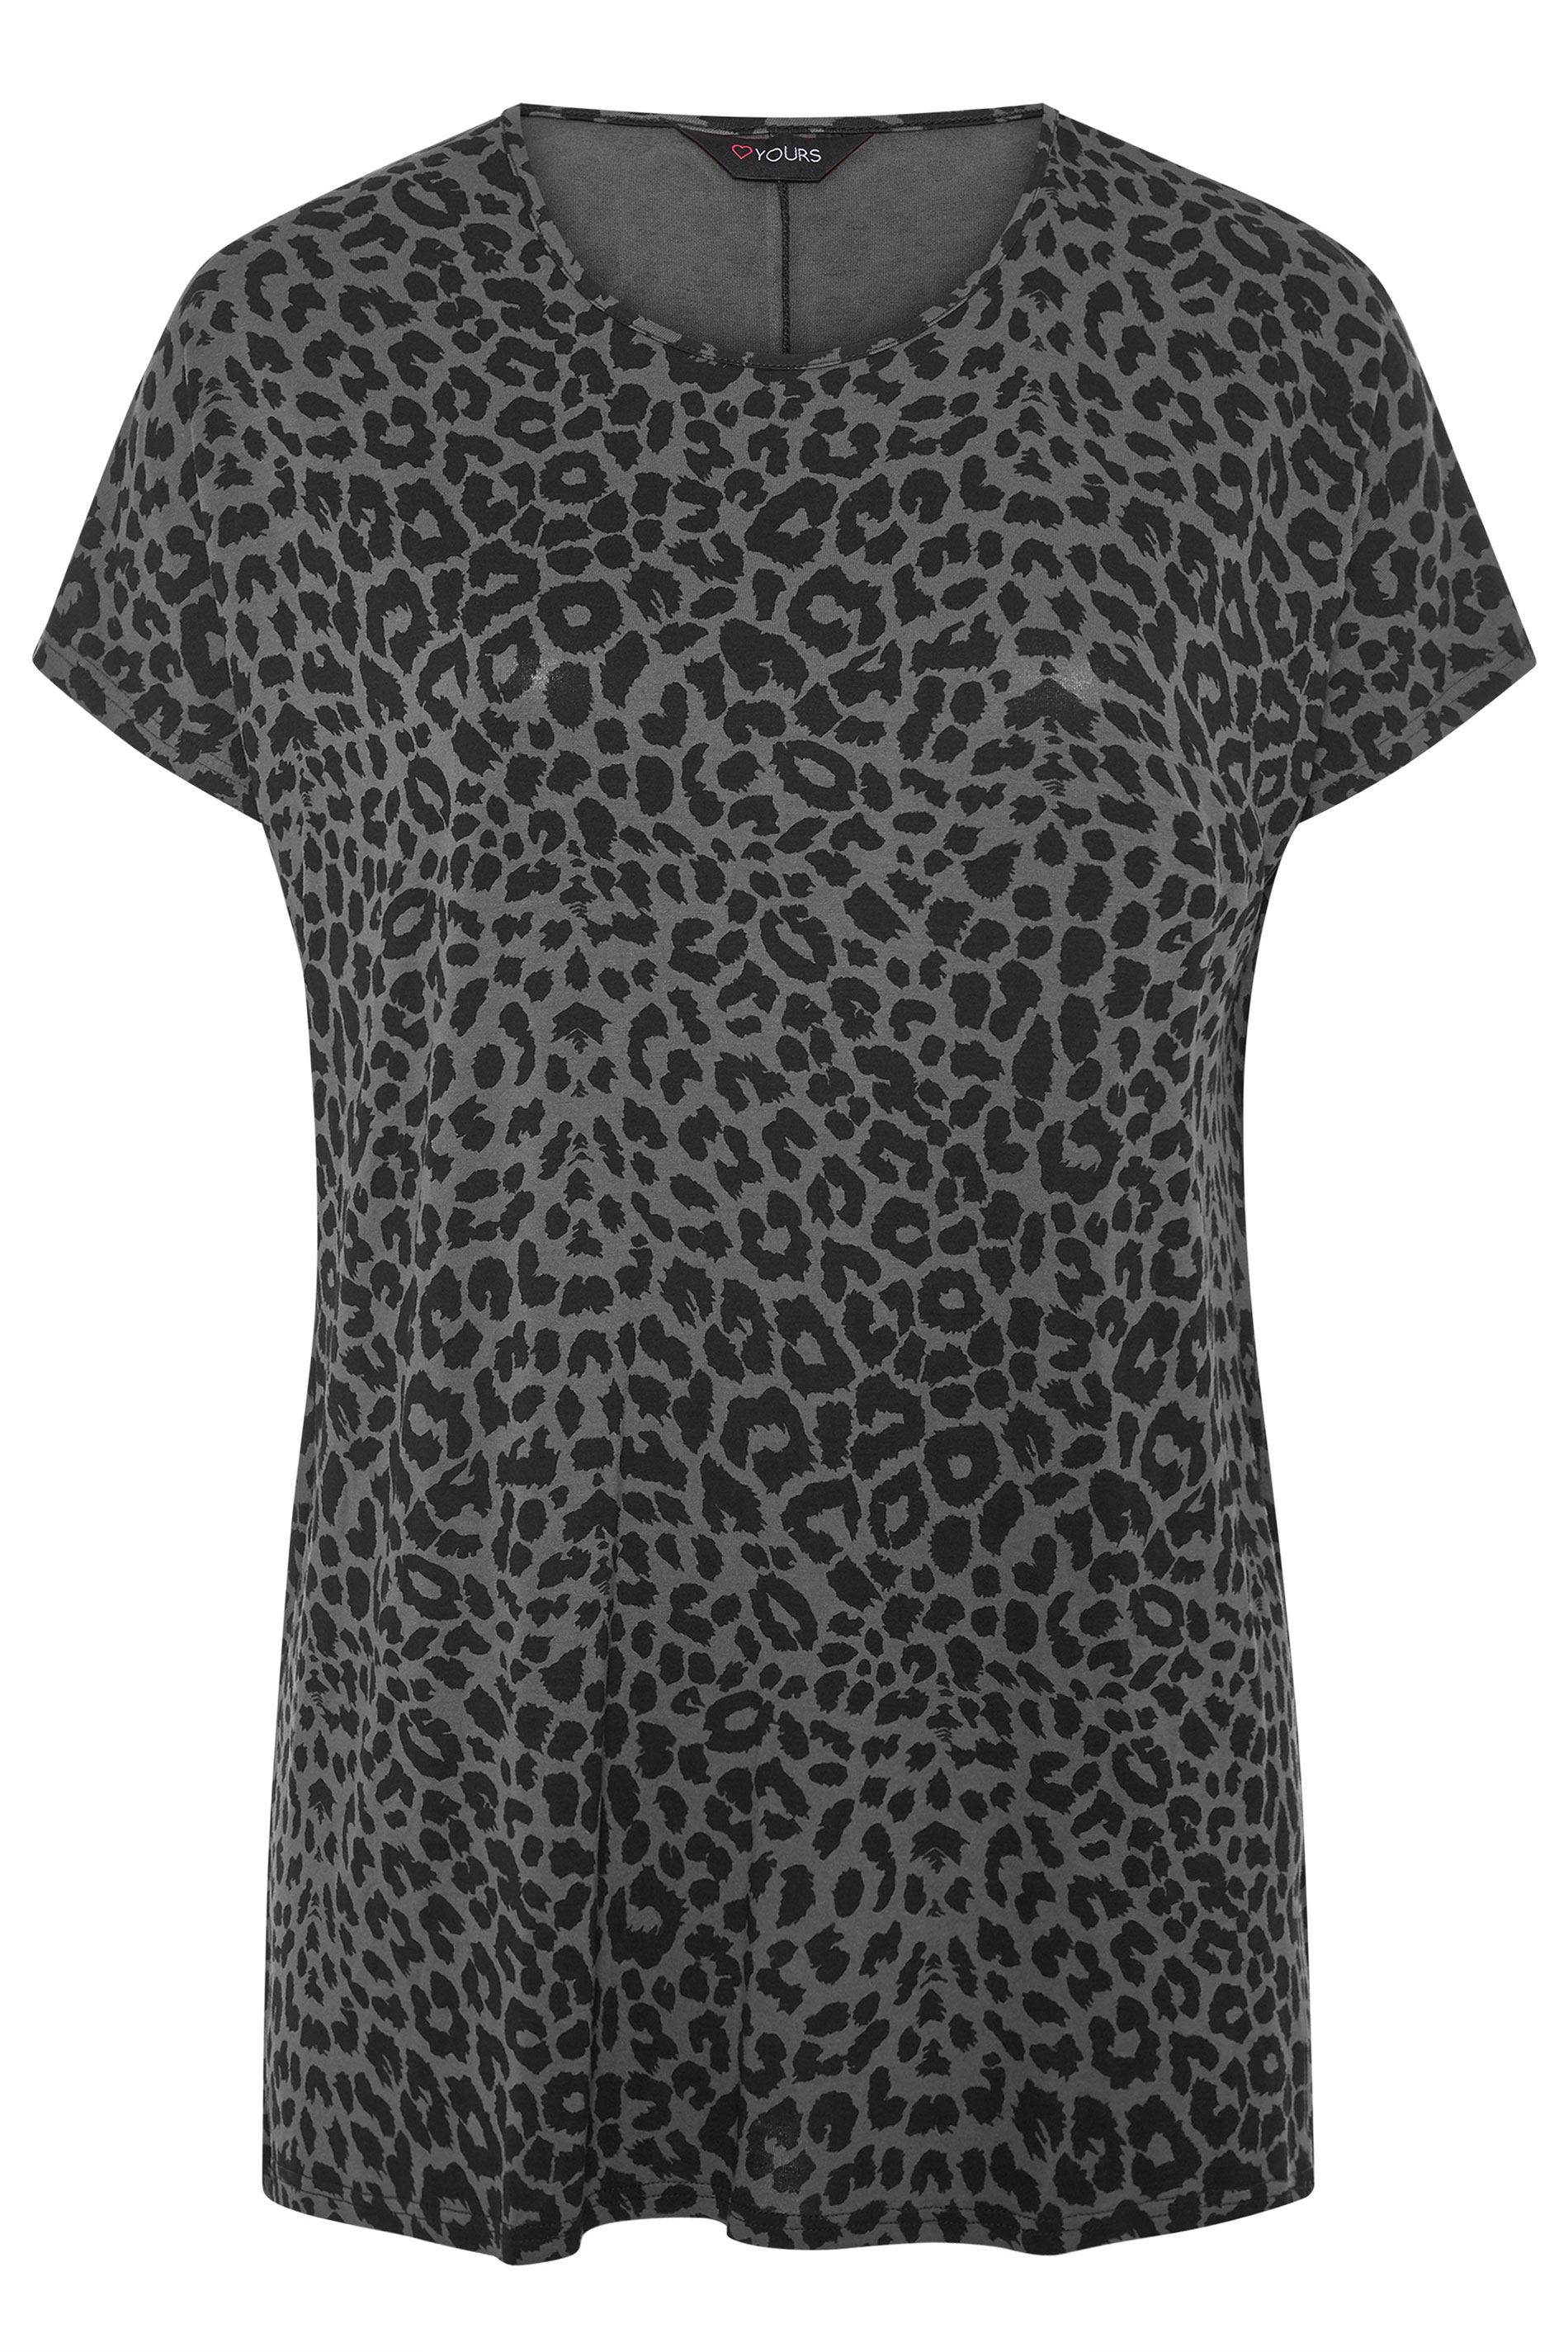 Grey Leopard Print Dipped Hem T-Shirt | Yours Clothing